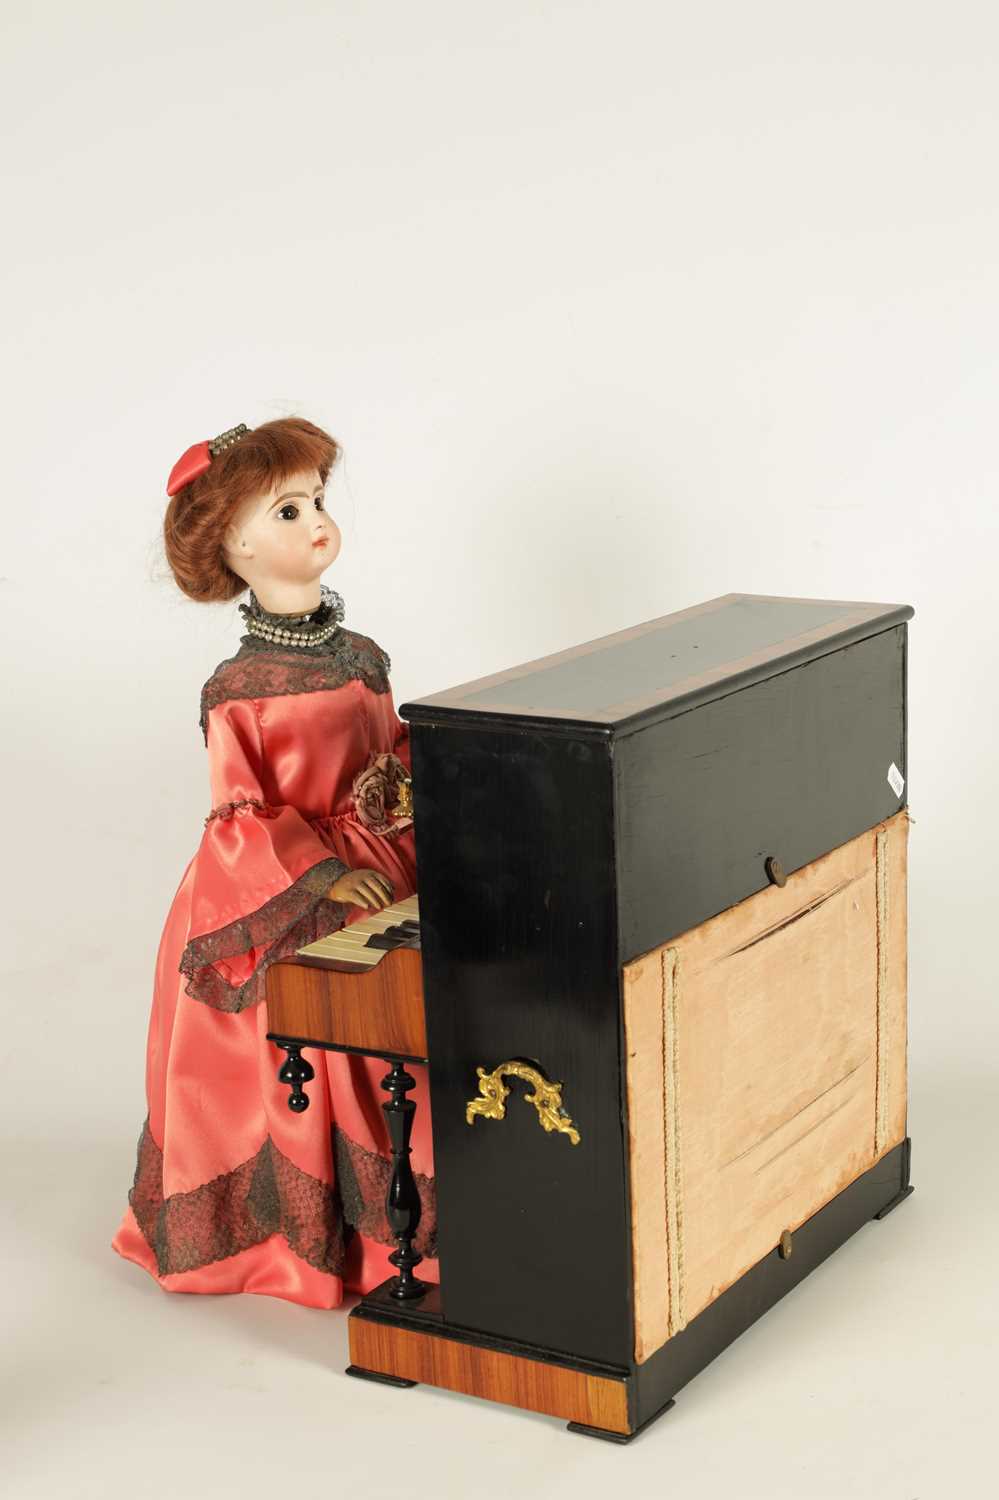 A RARE 19TH CENTURY FRENCH AUTOMATON MUSIC BOX - Image 8 of 13